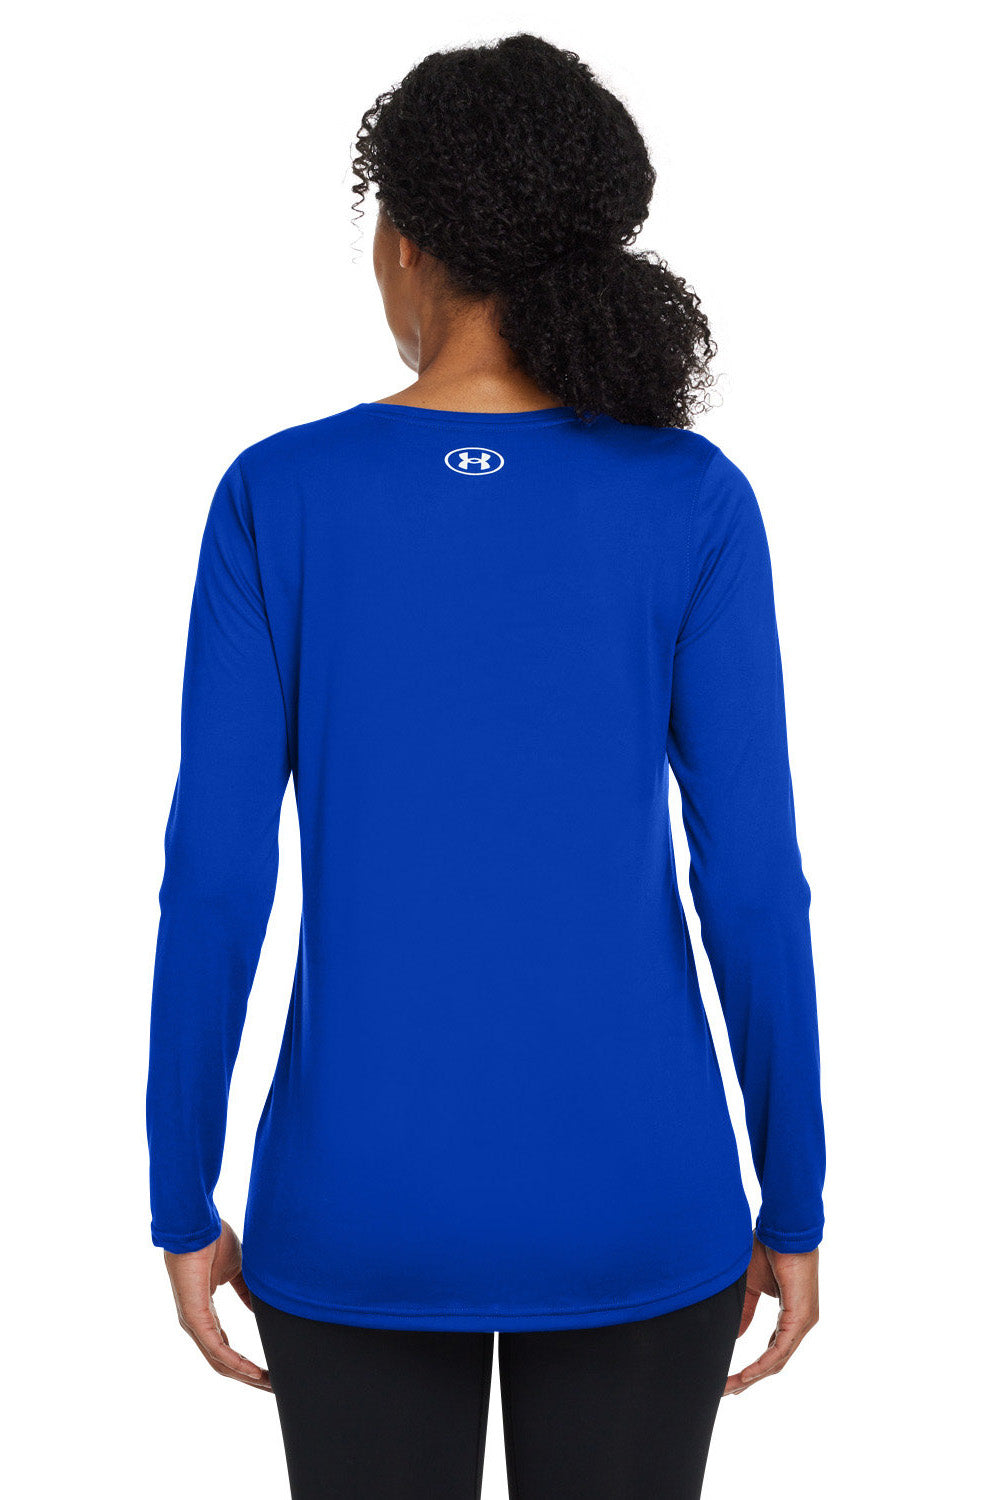 Under Armour 1376852 Womens Team Tech Moisture Wicking Long Sleeve Crewneck T-Shirt Royal Blue Model Back